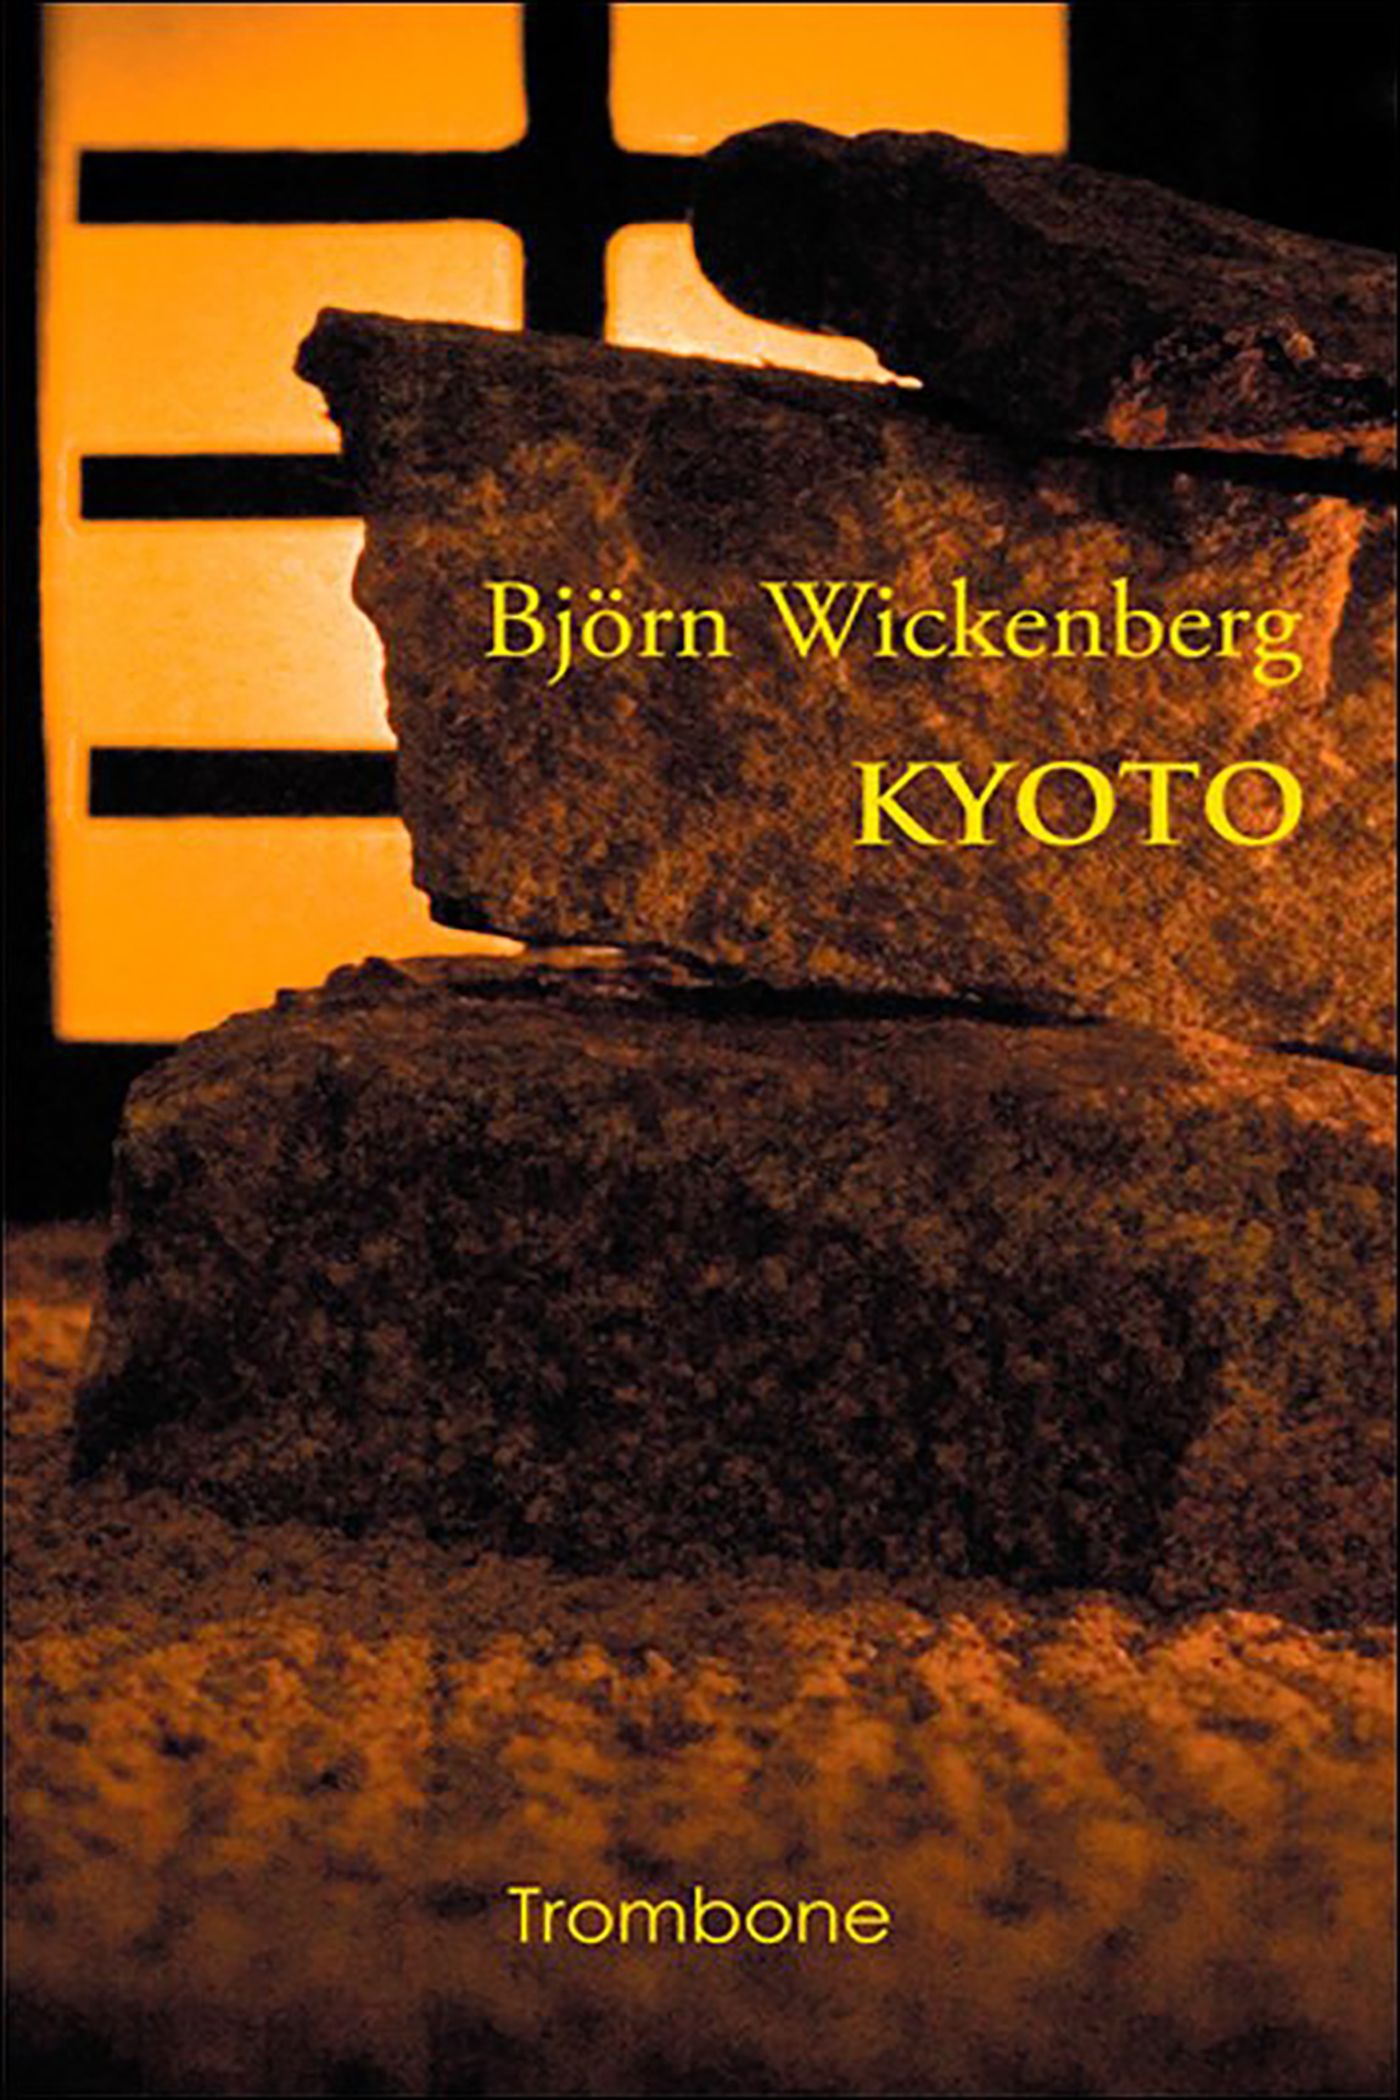 Kyoto, eBook by Björn Wickenberg